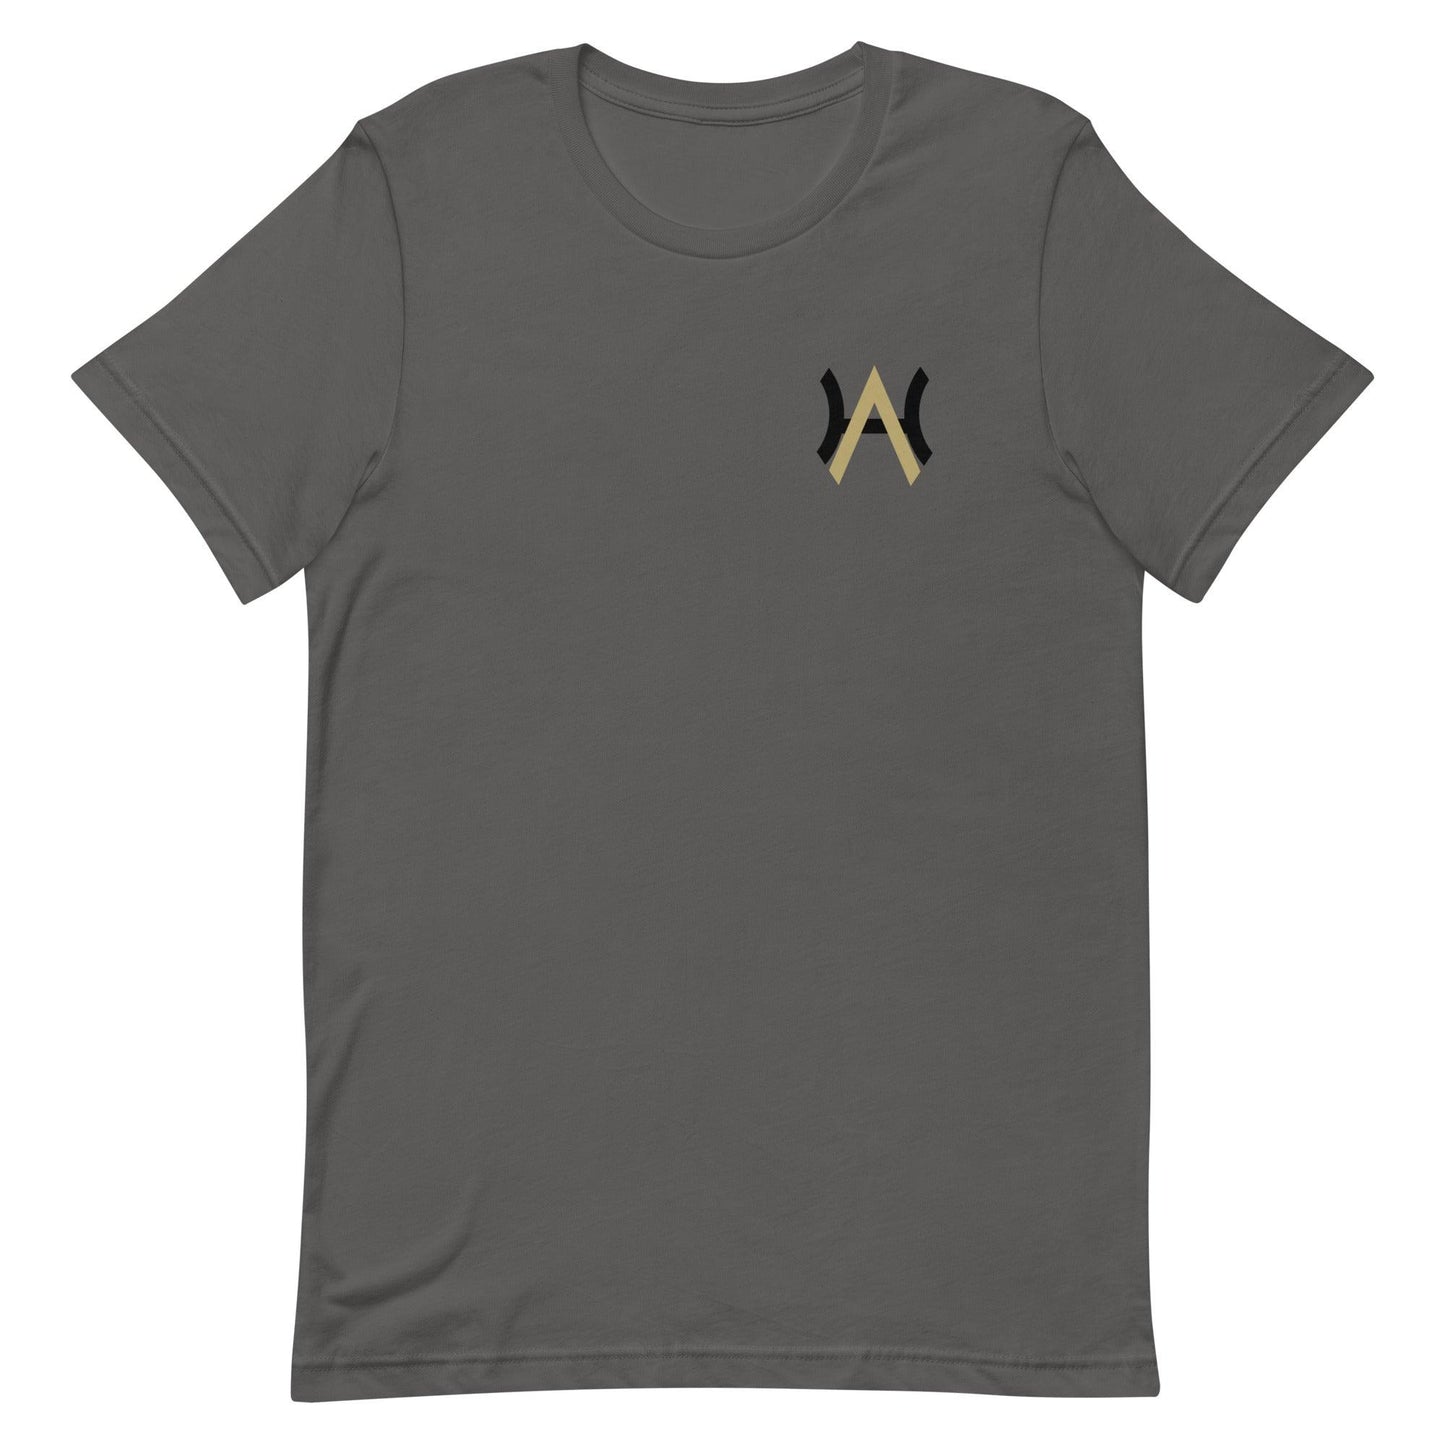 Andrew Harris "Essential" t-shirt - Fan Arch